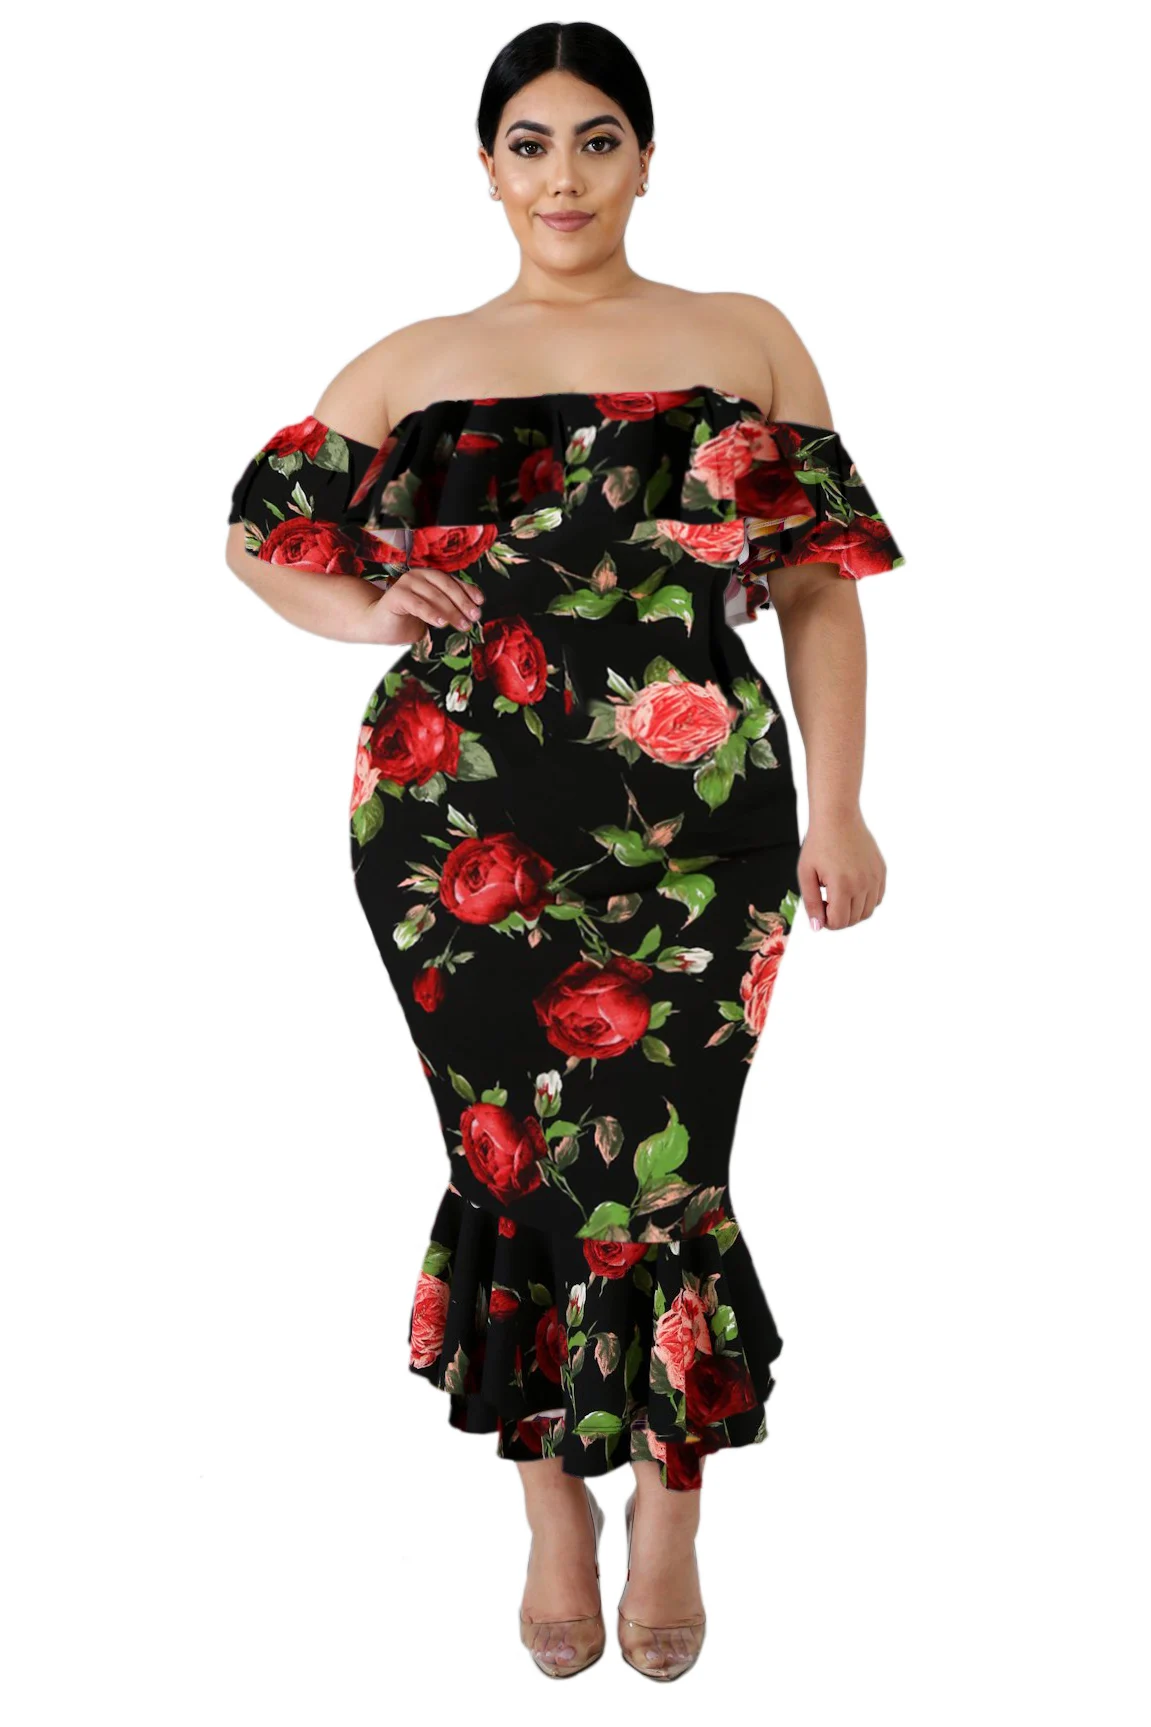 New Floral Print Fat Size Women Party Dress - Buy Fat Size Women Party ...